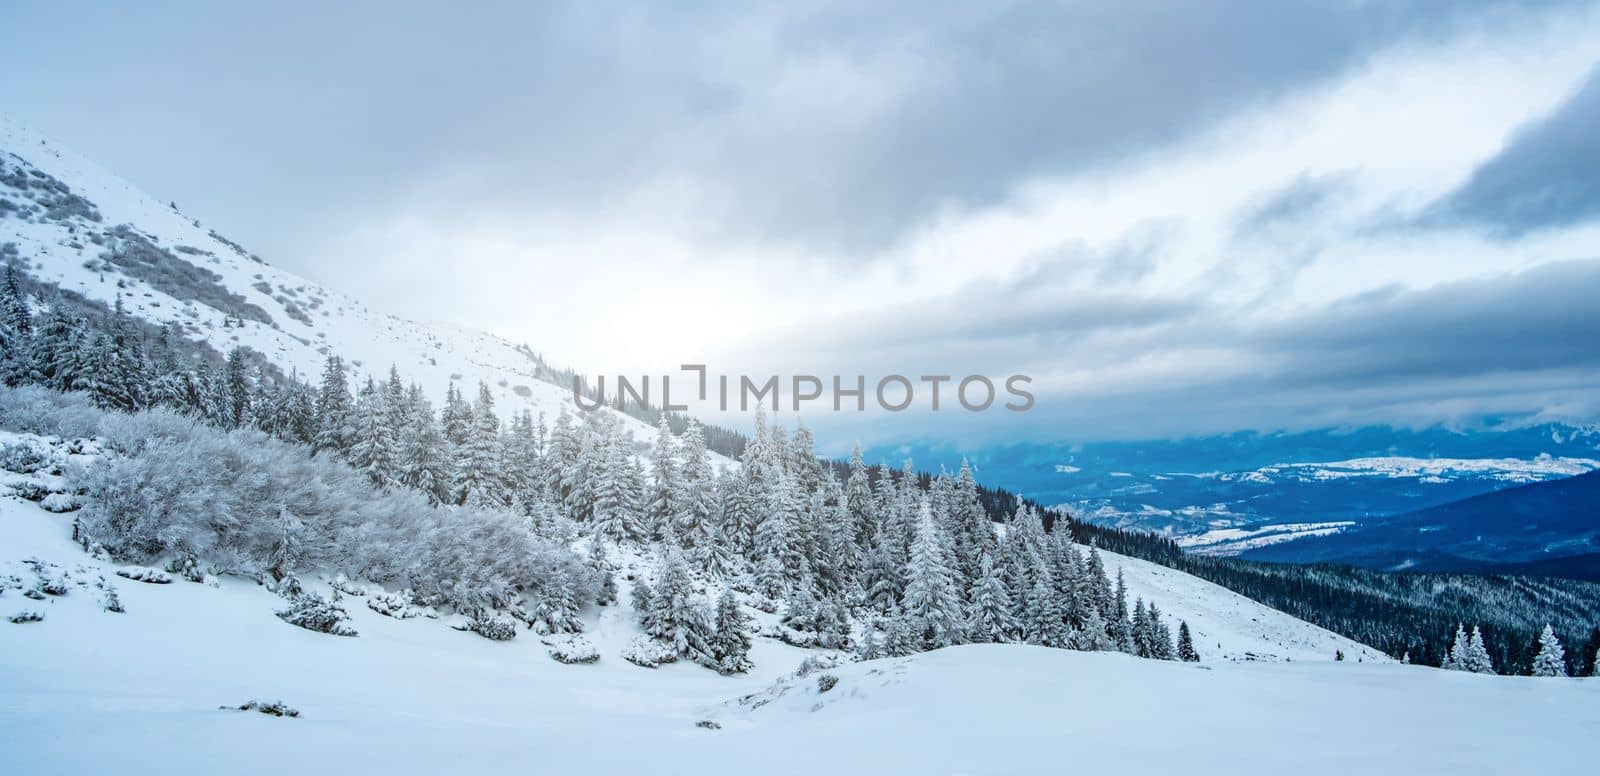 Scenic landscape of winter mountain range under cloudy sky